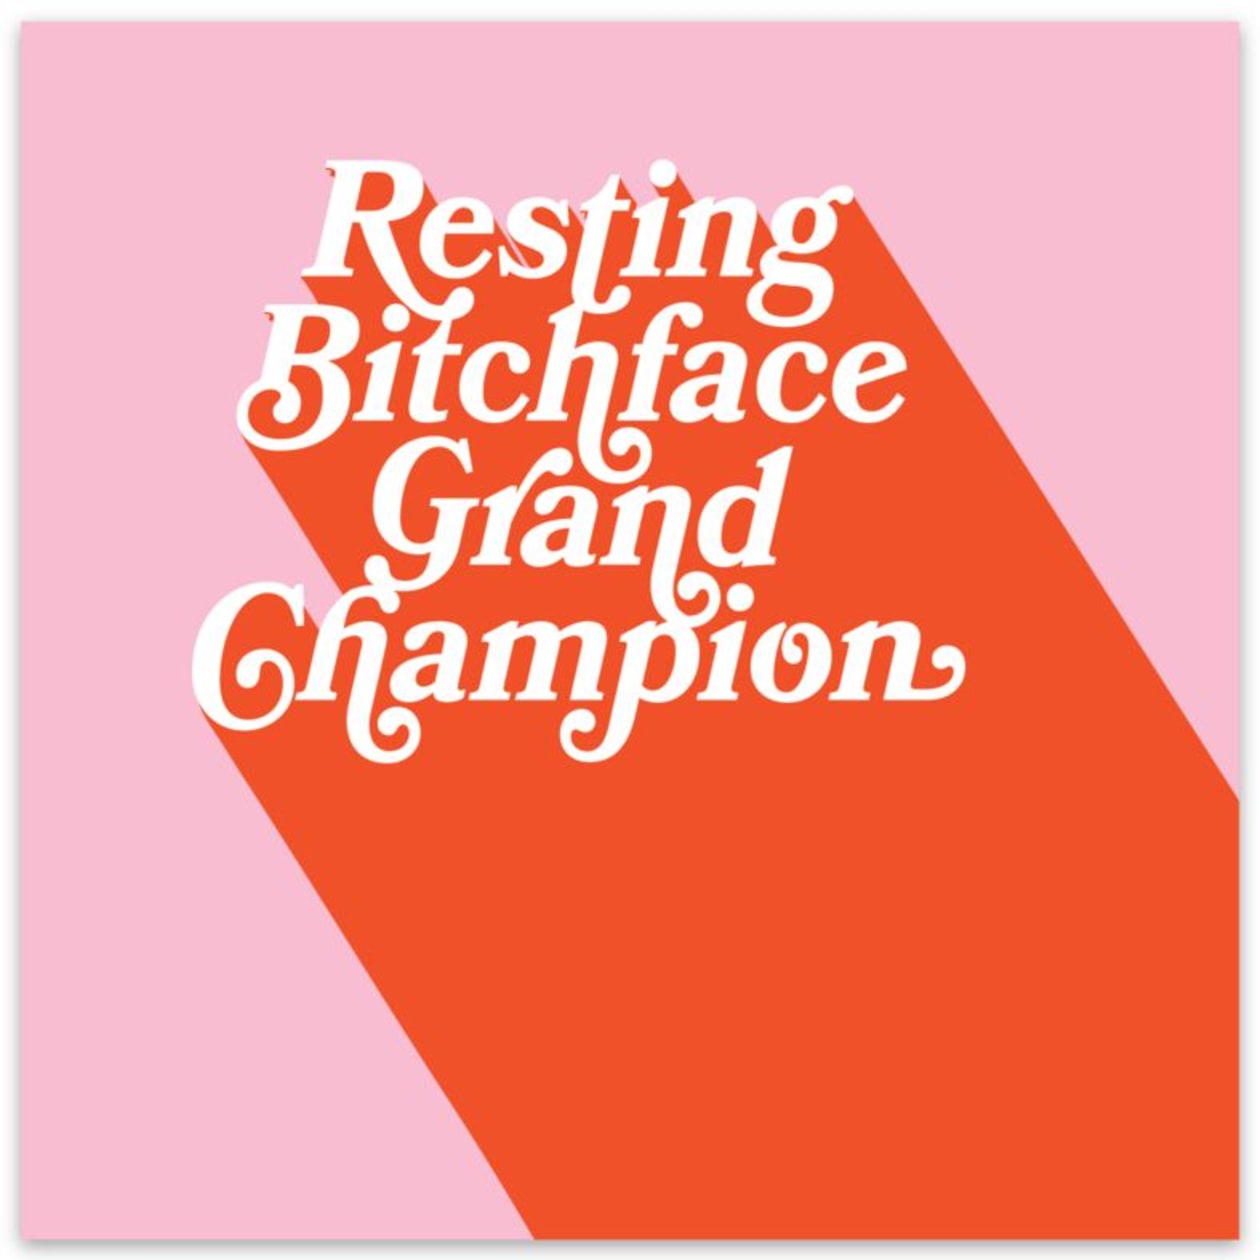 Resting Bitch Face Grand Champion Sticker | Vinyl Laptop Phone Water Bottle Decal by Fun Club at GetBullish